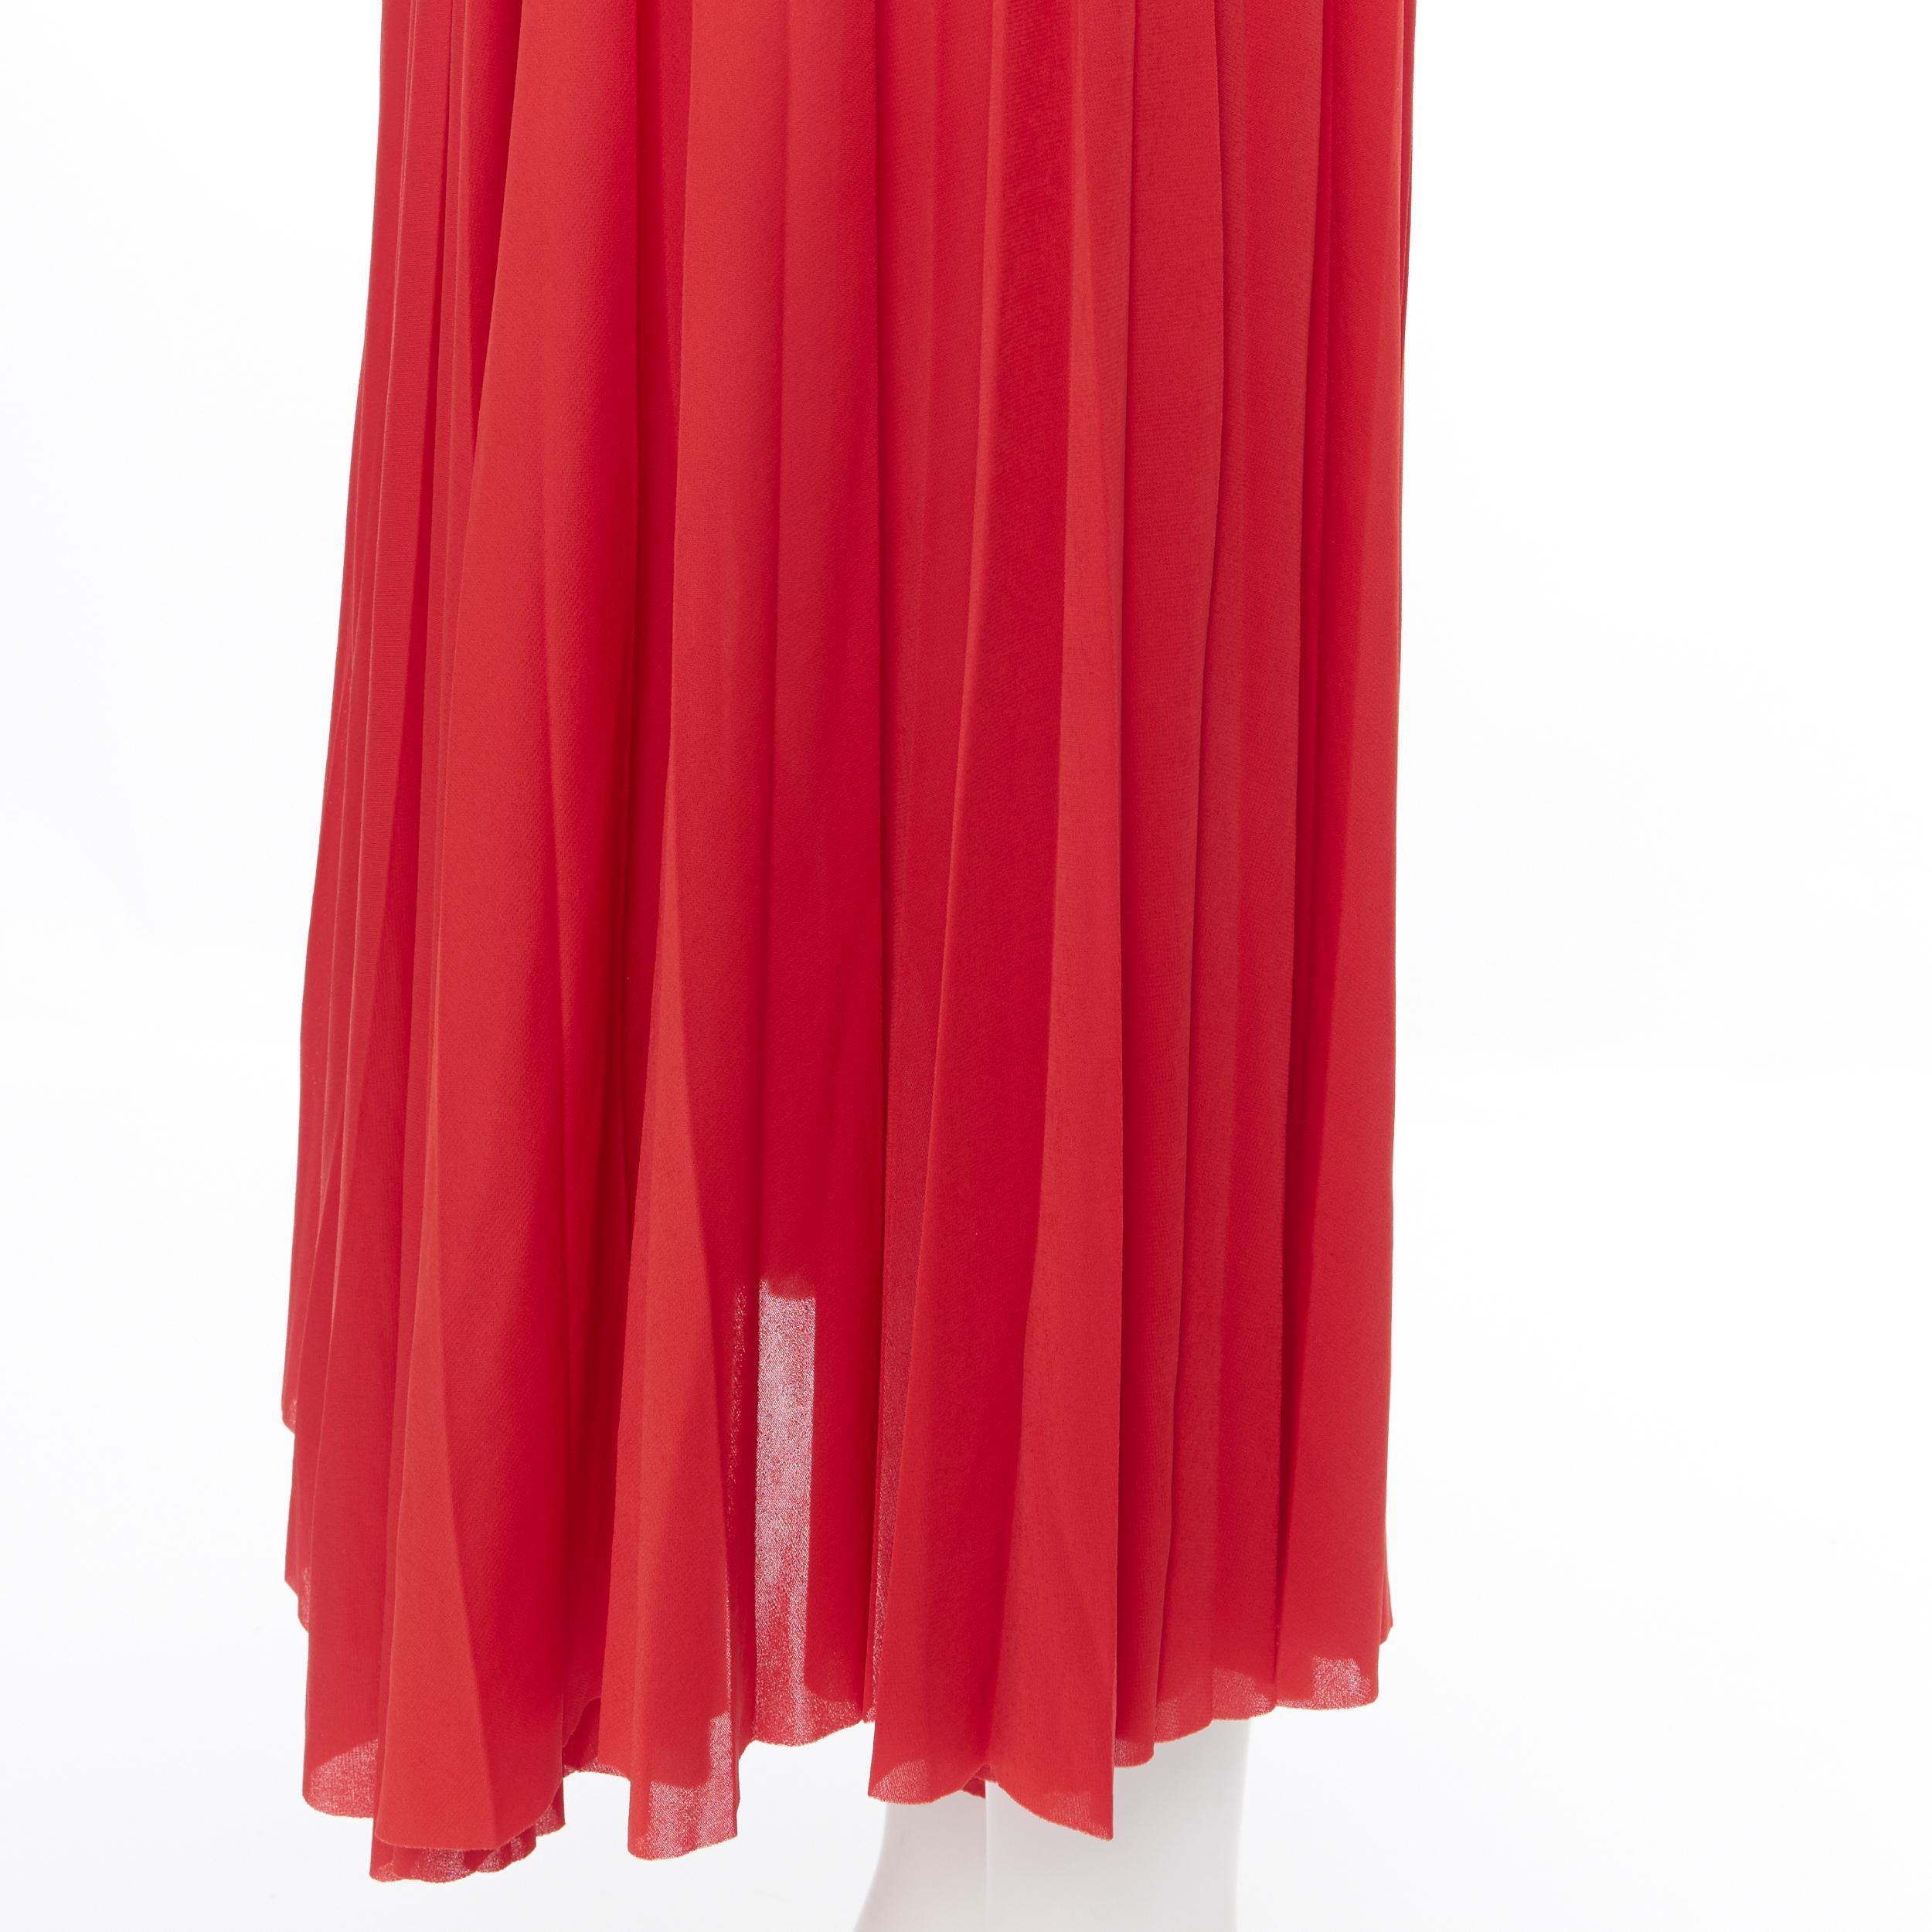 OLD CELINE PHOEBE PHILO 100% polyester poppy red pleated raw cut hem skirt FR36 2